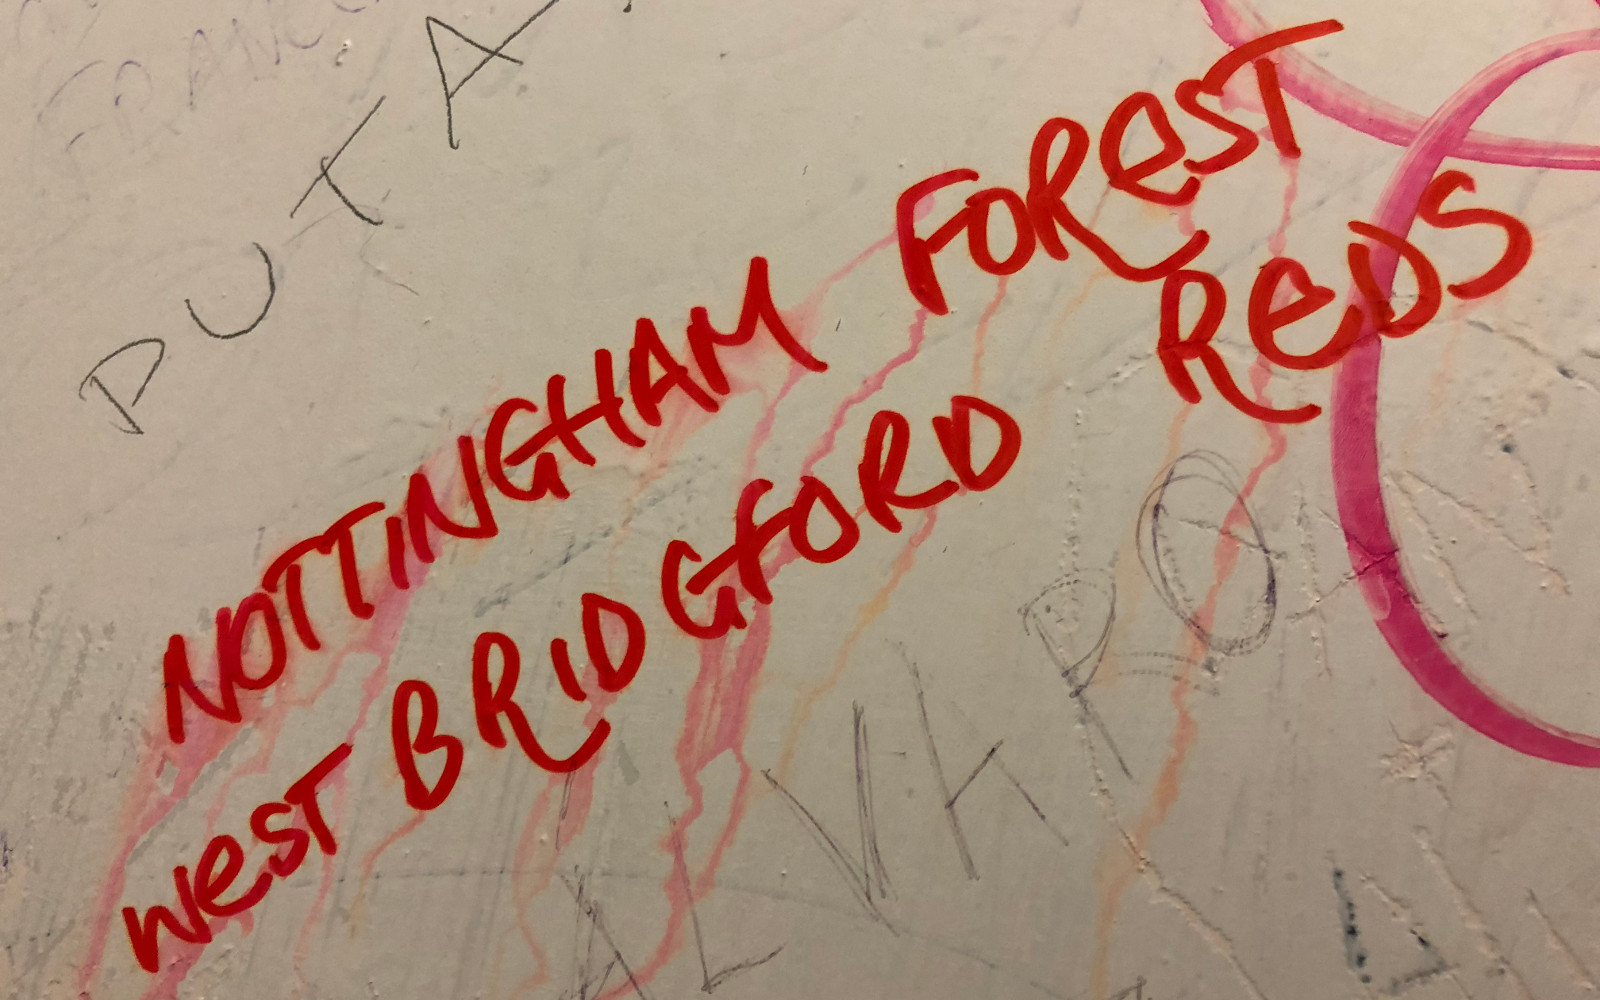 Graffiti in the Colosseum - NOTTINGHAM FOREST WEST BRIDGFORD REDS